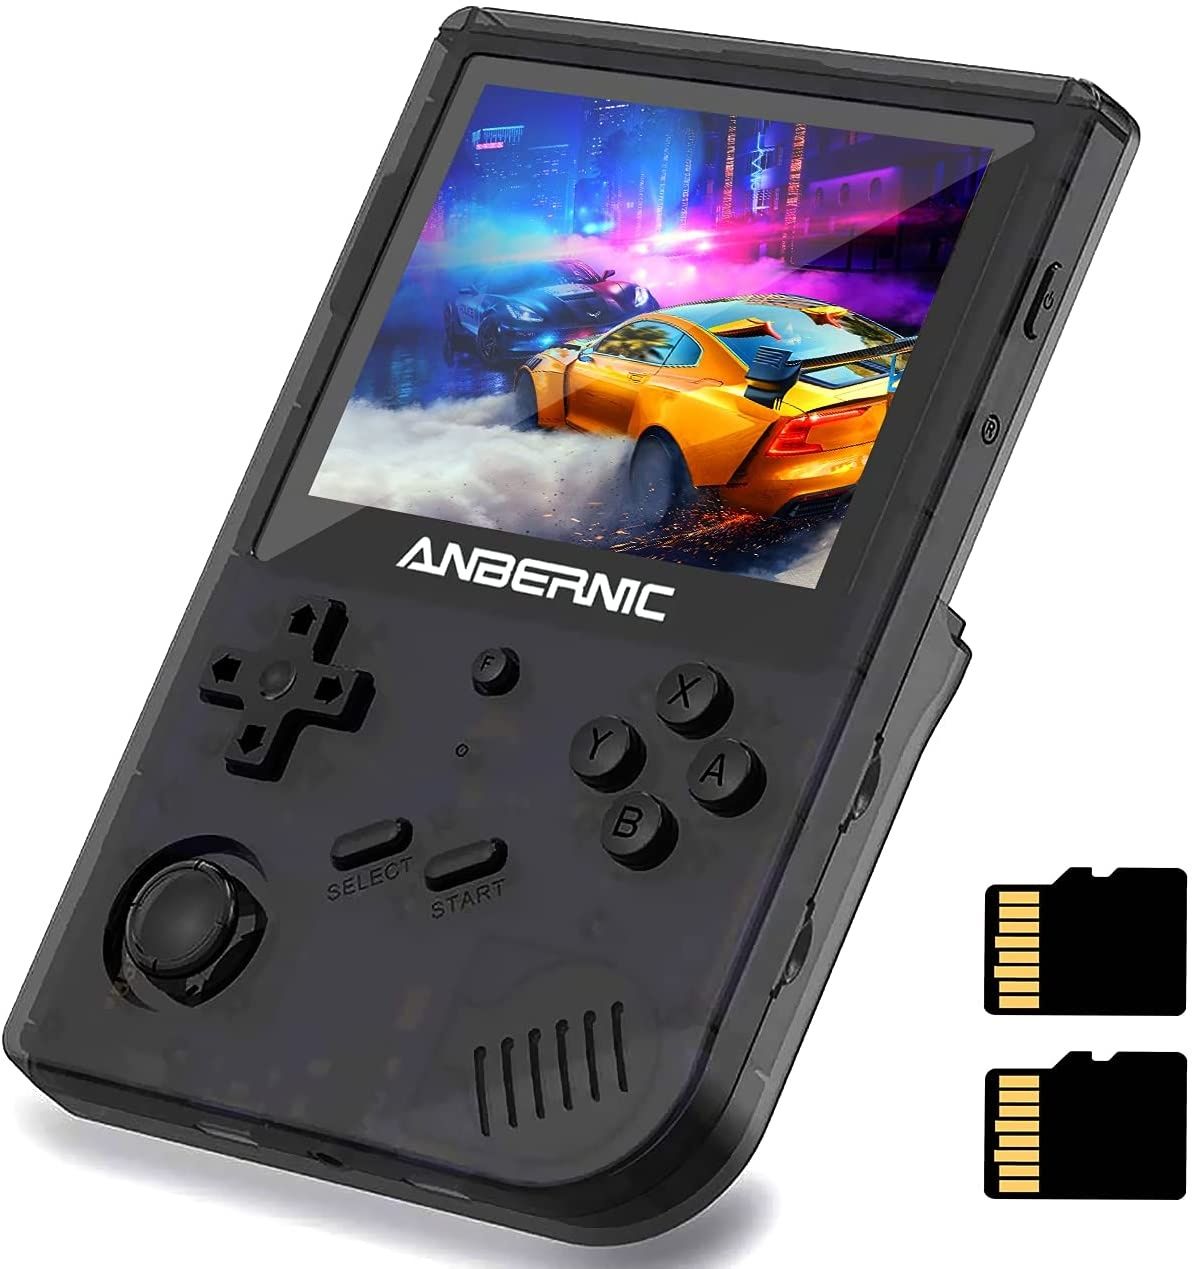 Anbernic RG351V Handheld Game Console